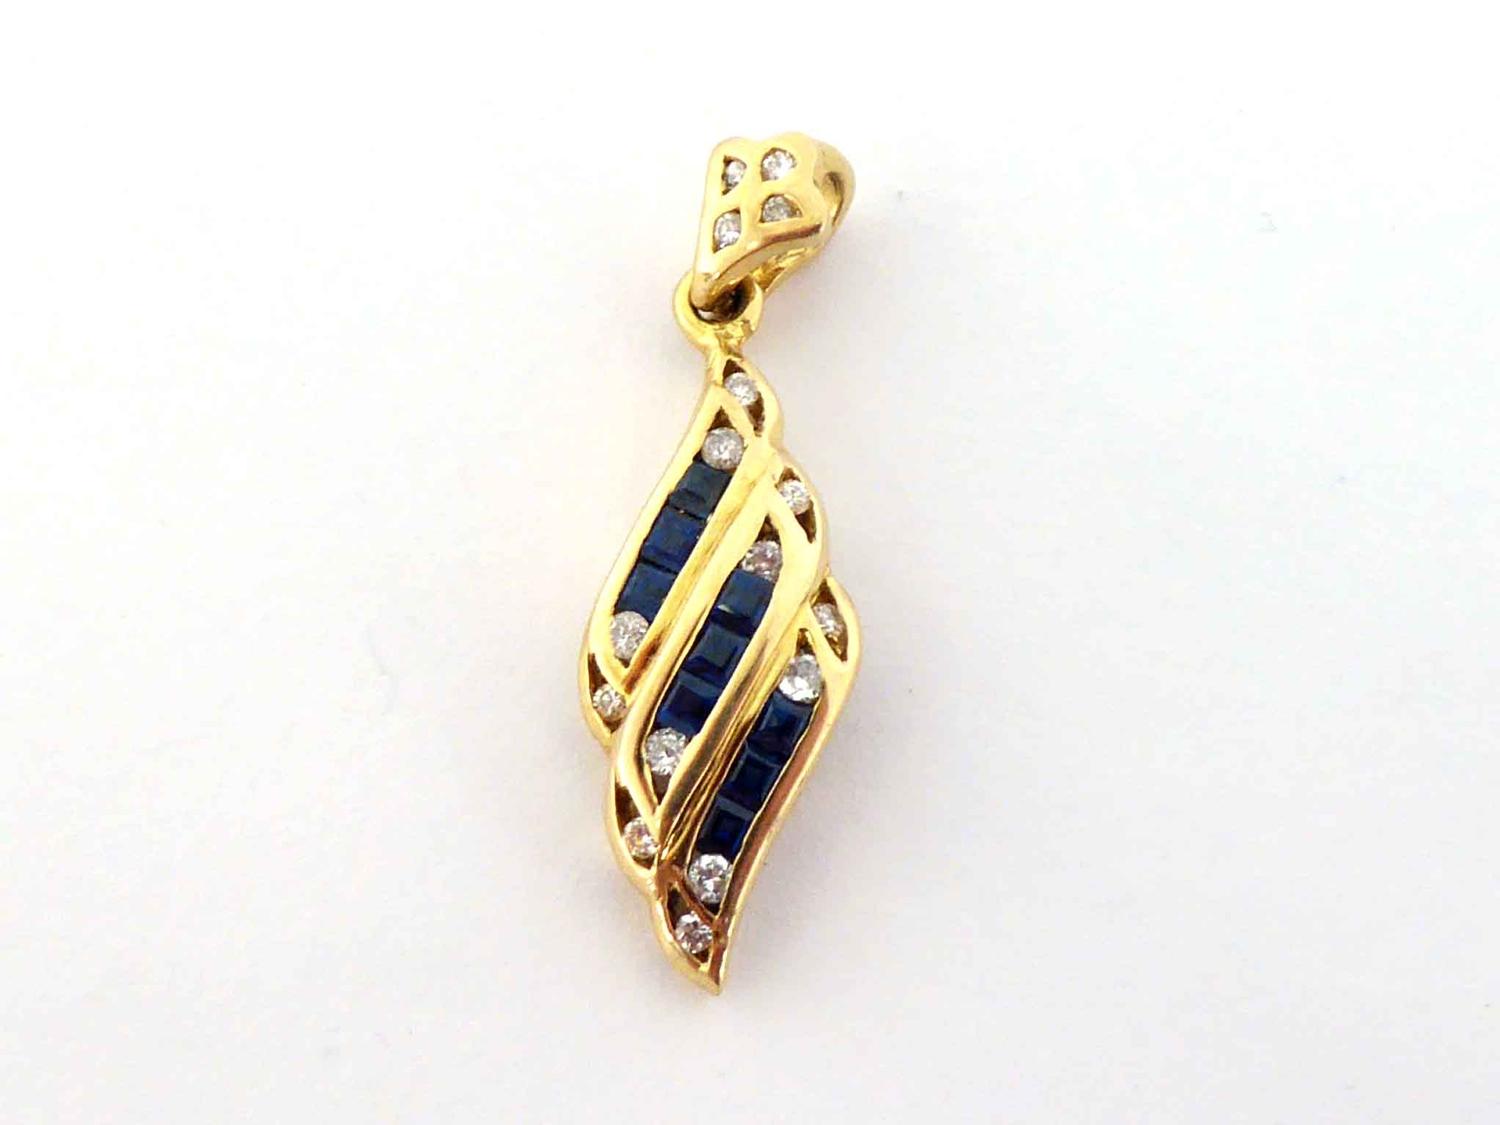 A sapphire and diamond pendant, set with three diagonal rows of calibre cut sapphires, brilliant cut